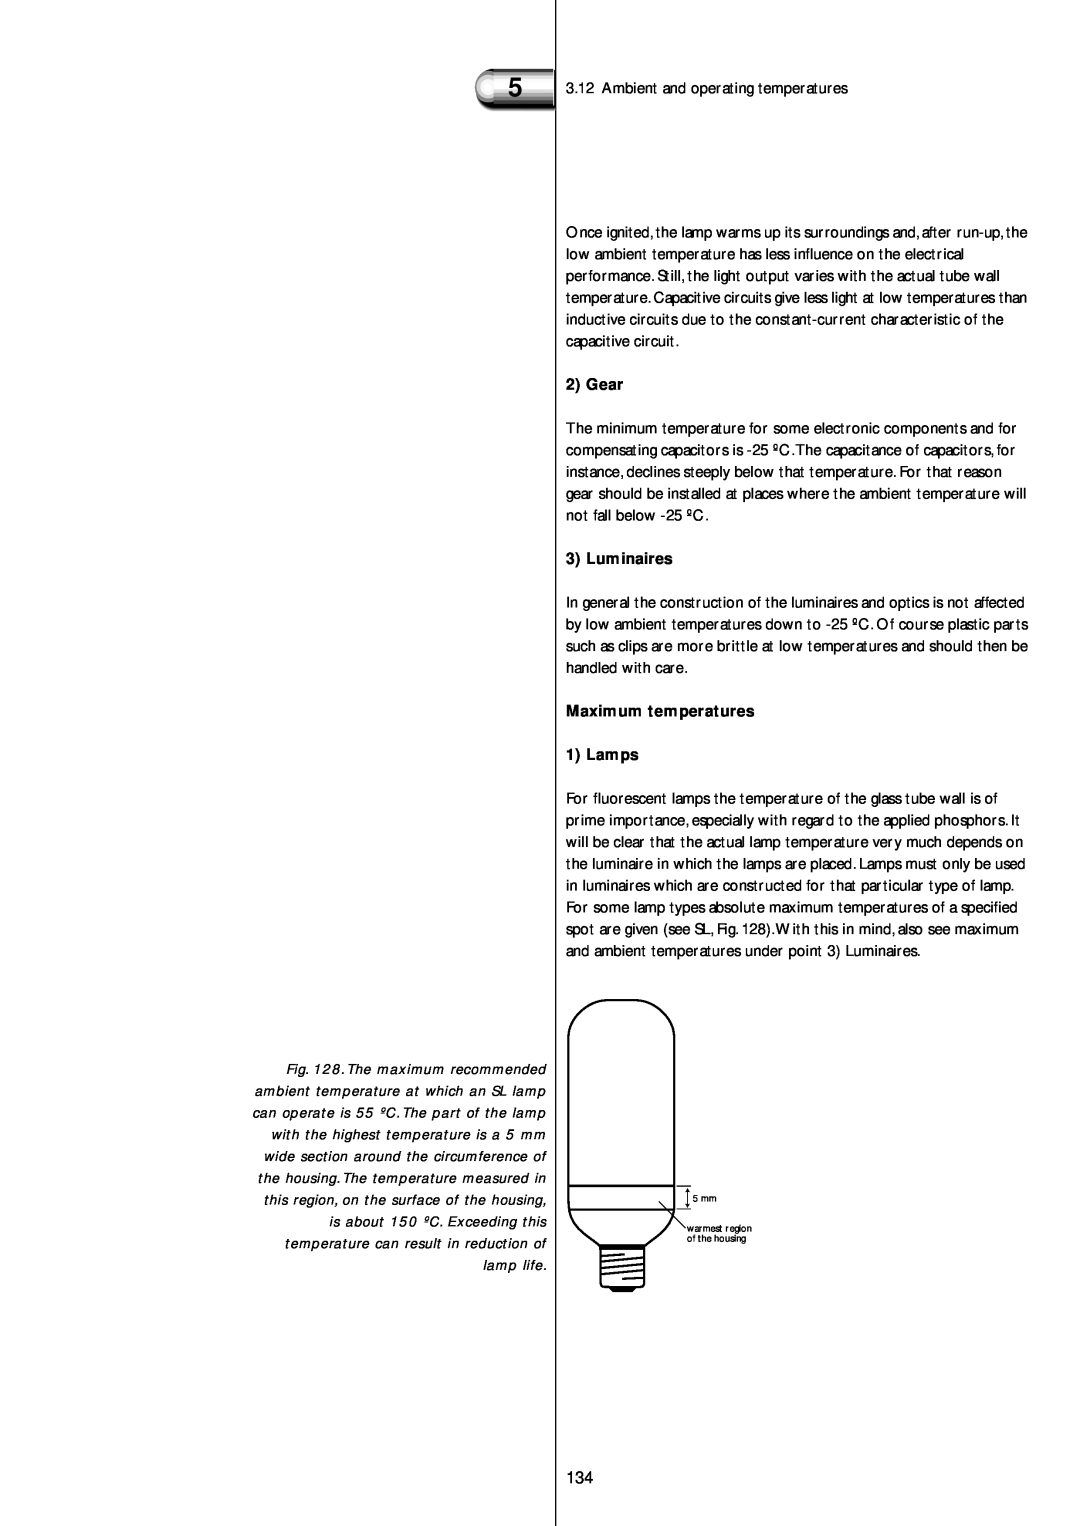 Philips Electromagnetic Lamp manual Gear, Luminaires, Maximum temperatures 1 Lamps 